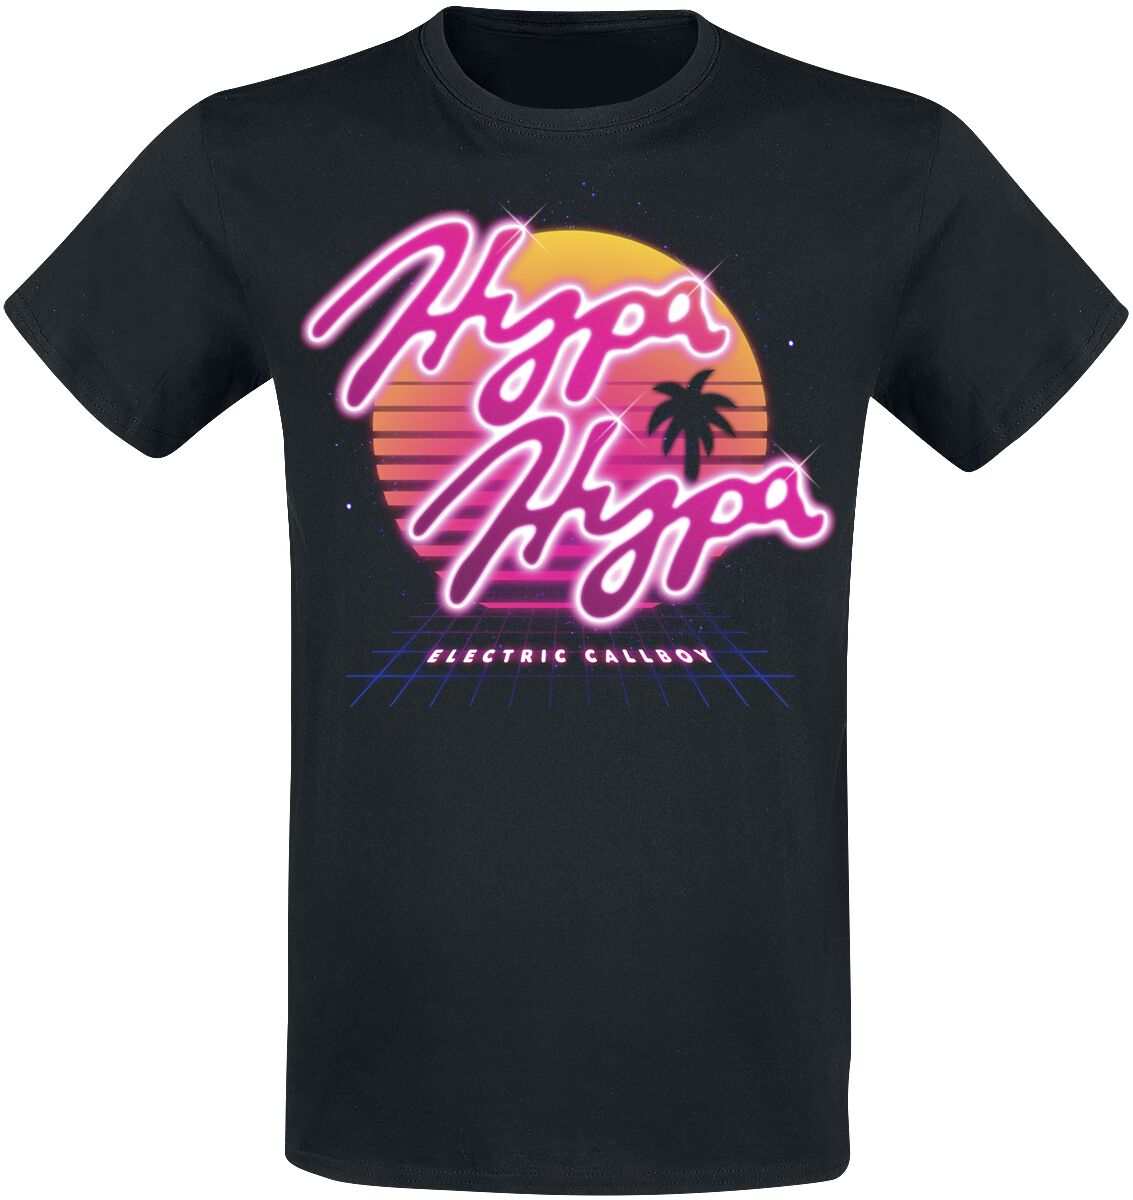 Hypa Hypa T-Shirt schwarz von Electric Callboy